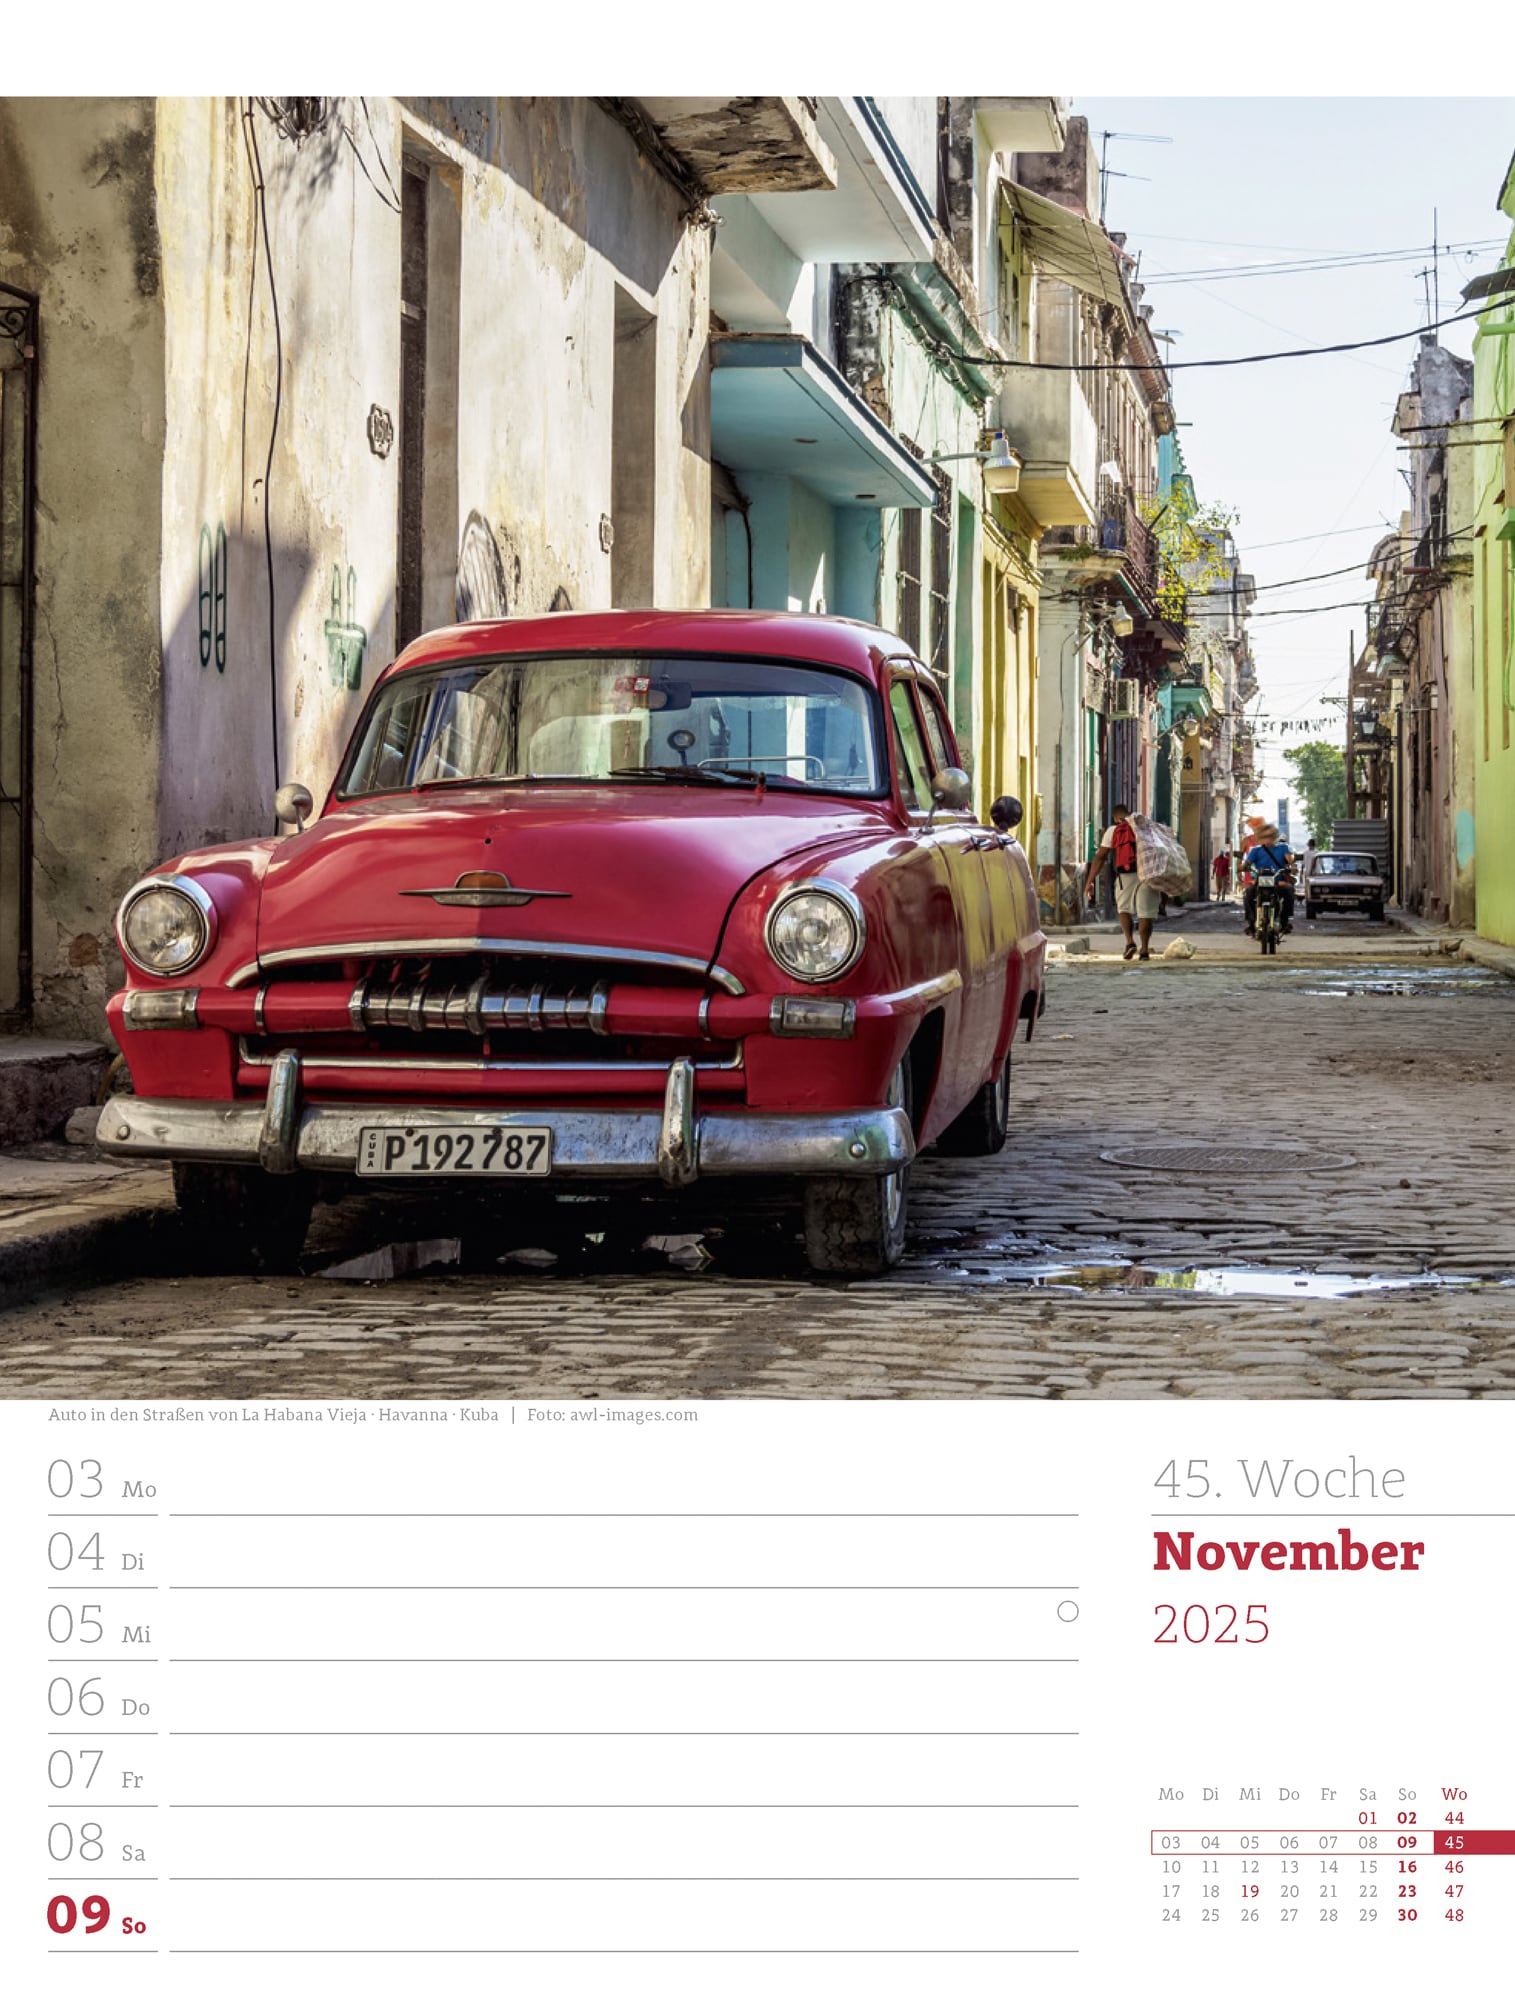 Ackermann Calendar Travel the World 2025 - Weekly Planner - Inside View 48